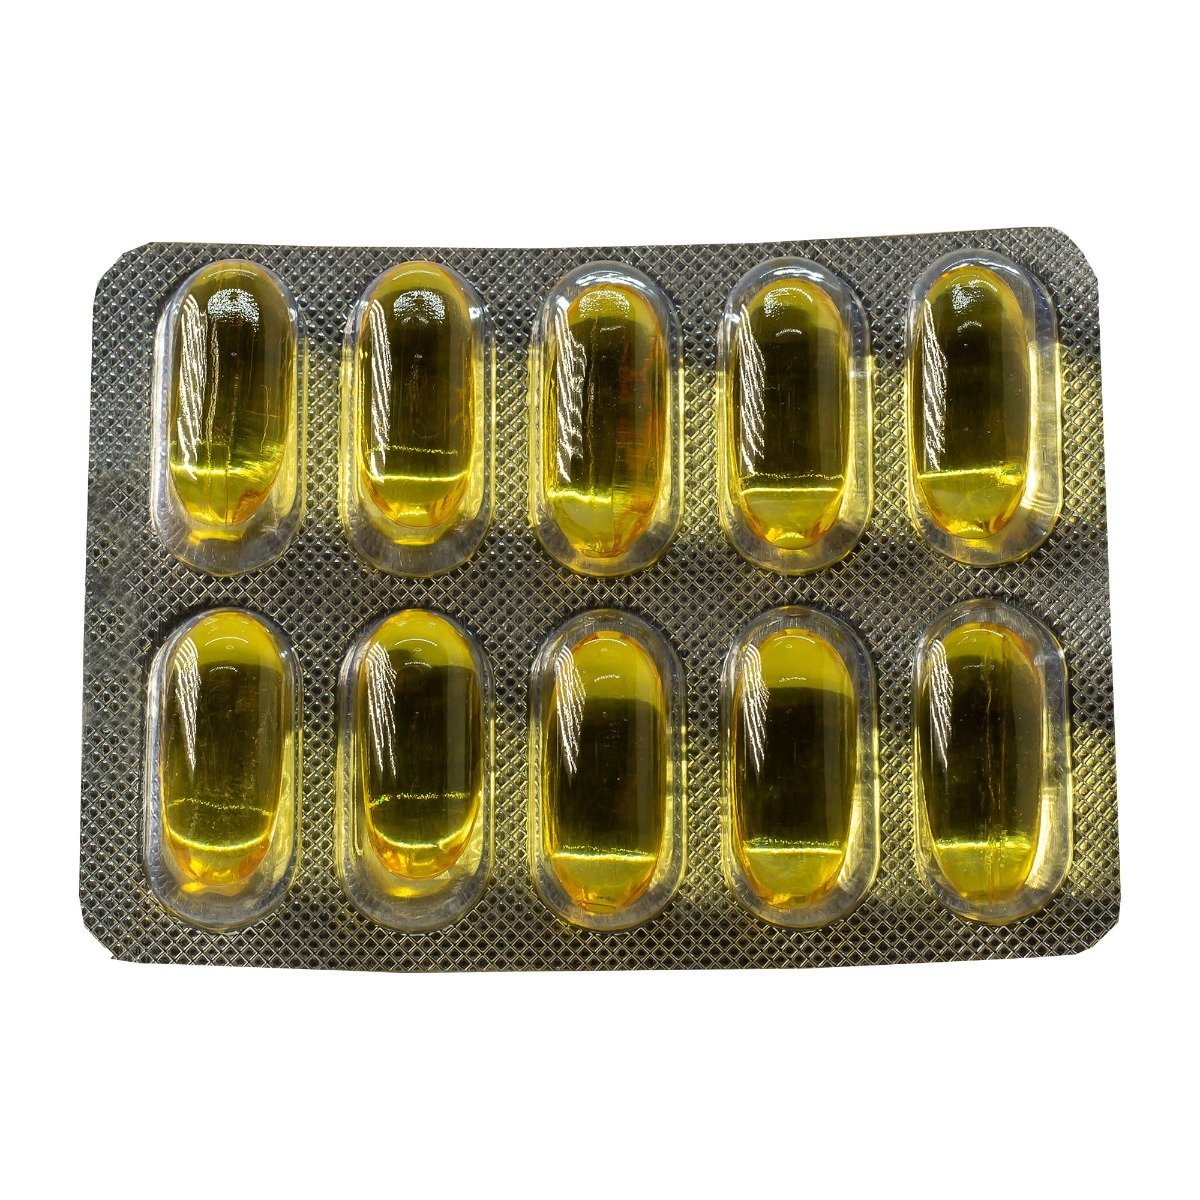 Omega 3 Plus - 30 Capsules - Bloom Pharmacy